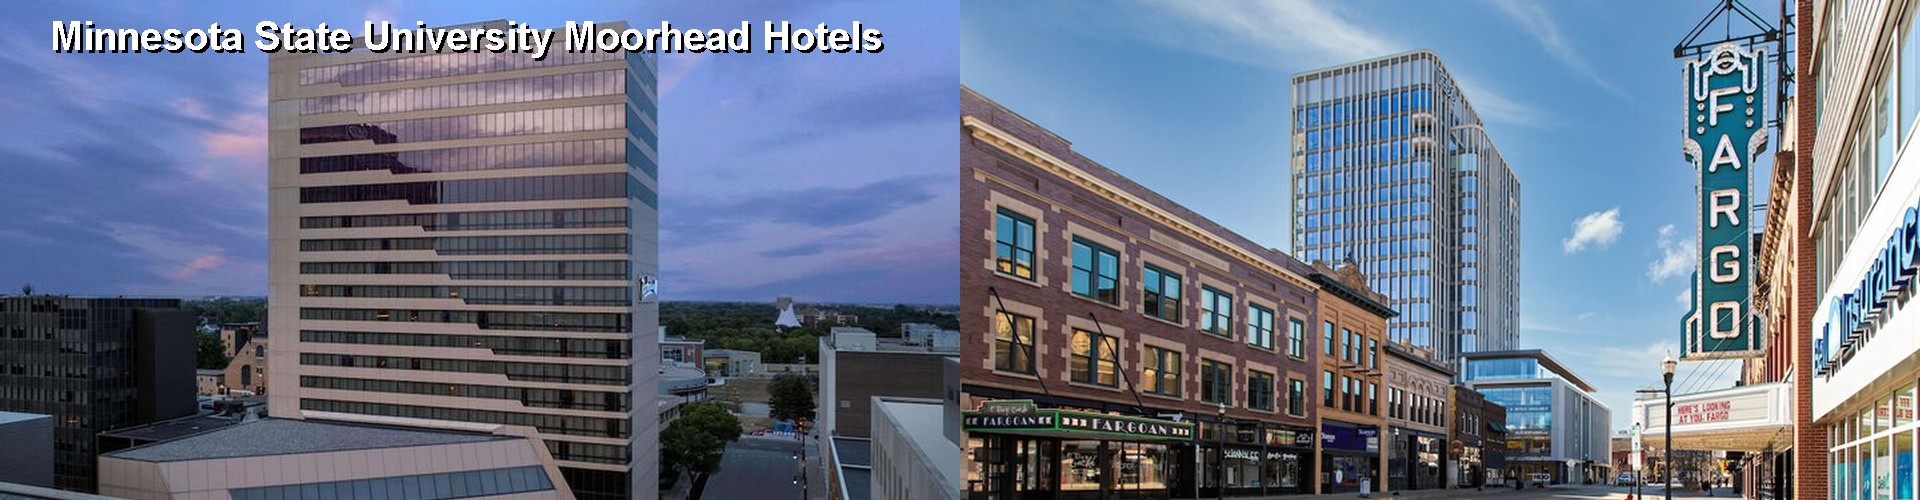 4 Best Hotels near Minnesota State University Moorhead